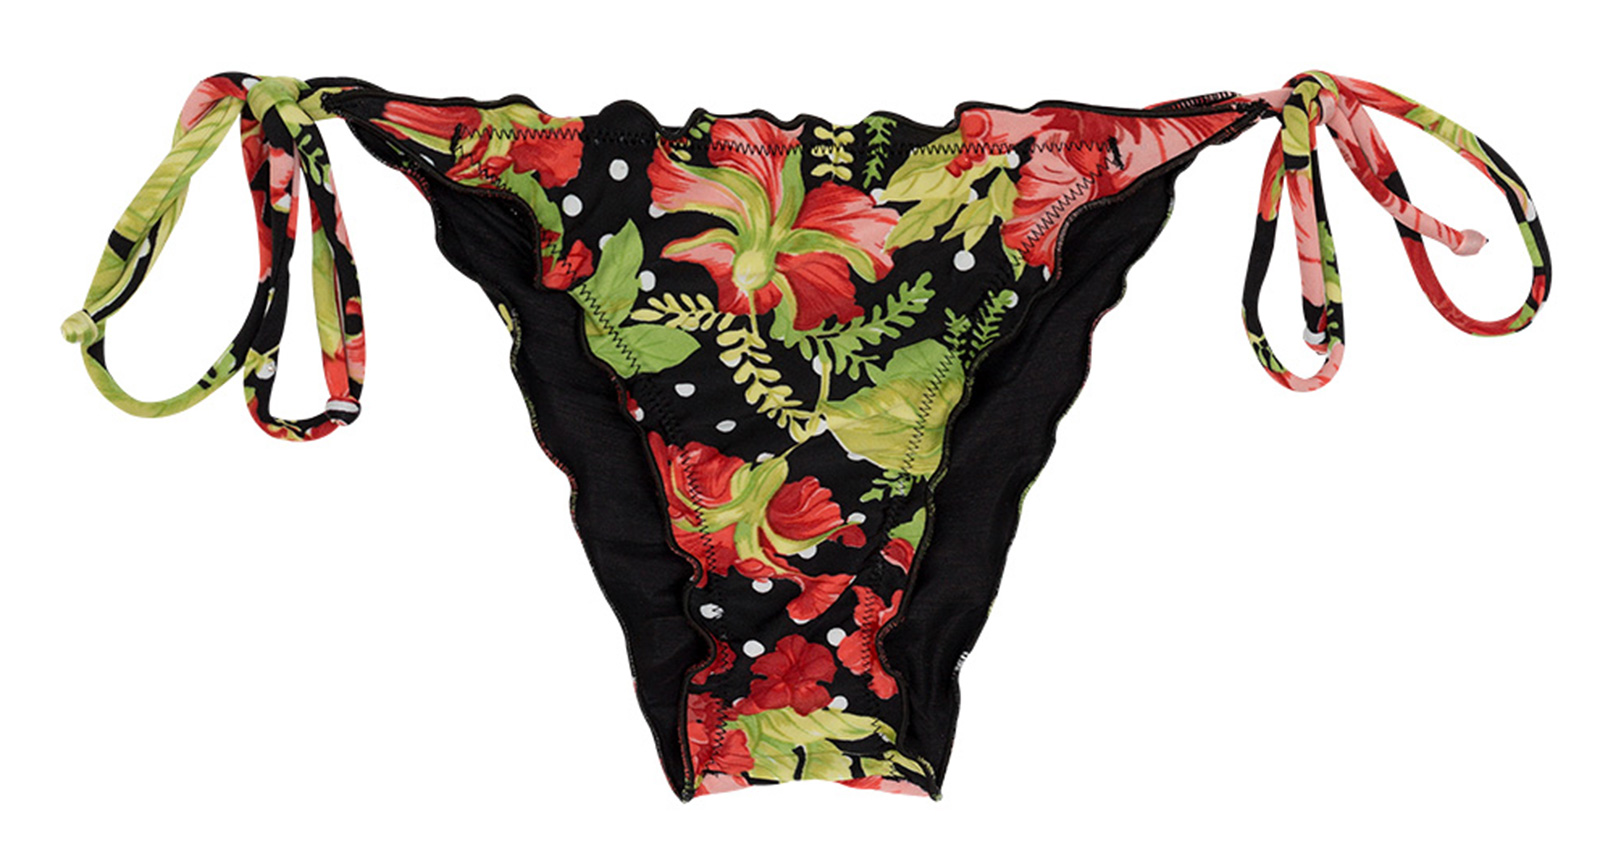 Scrunch Side Tie Bikini Bottom In Flowers And Polka Dot Print Bottom